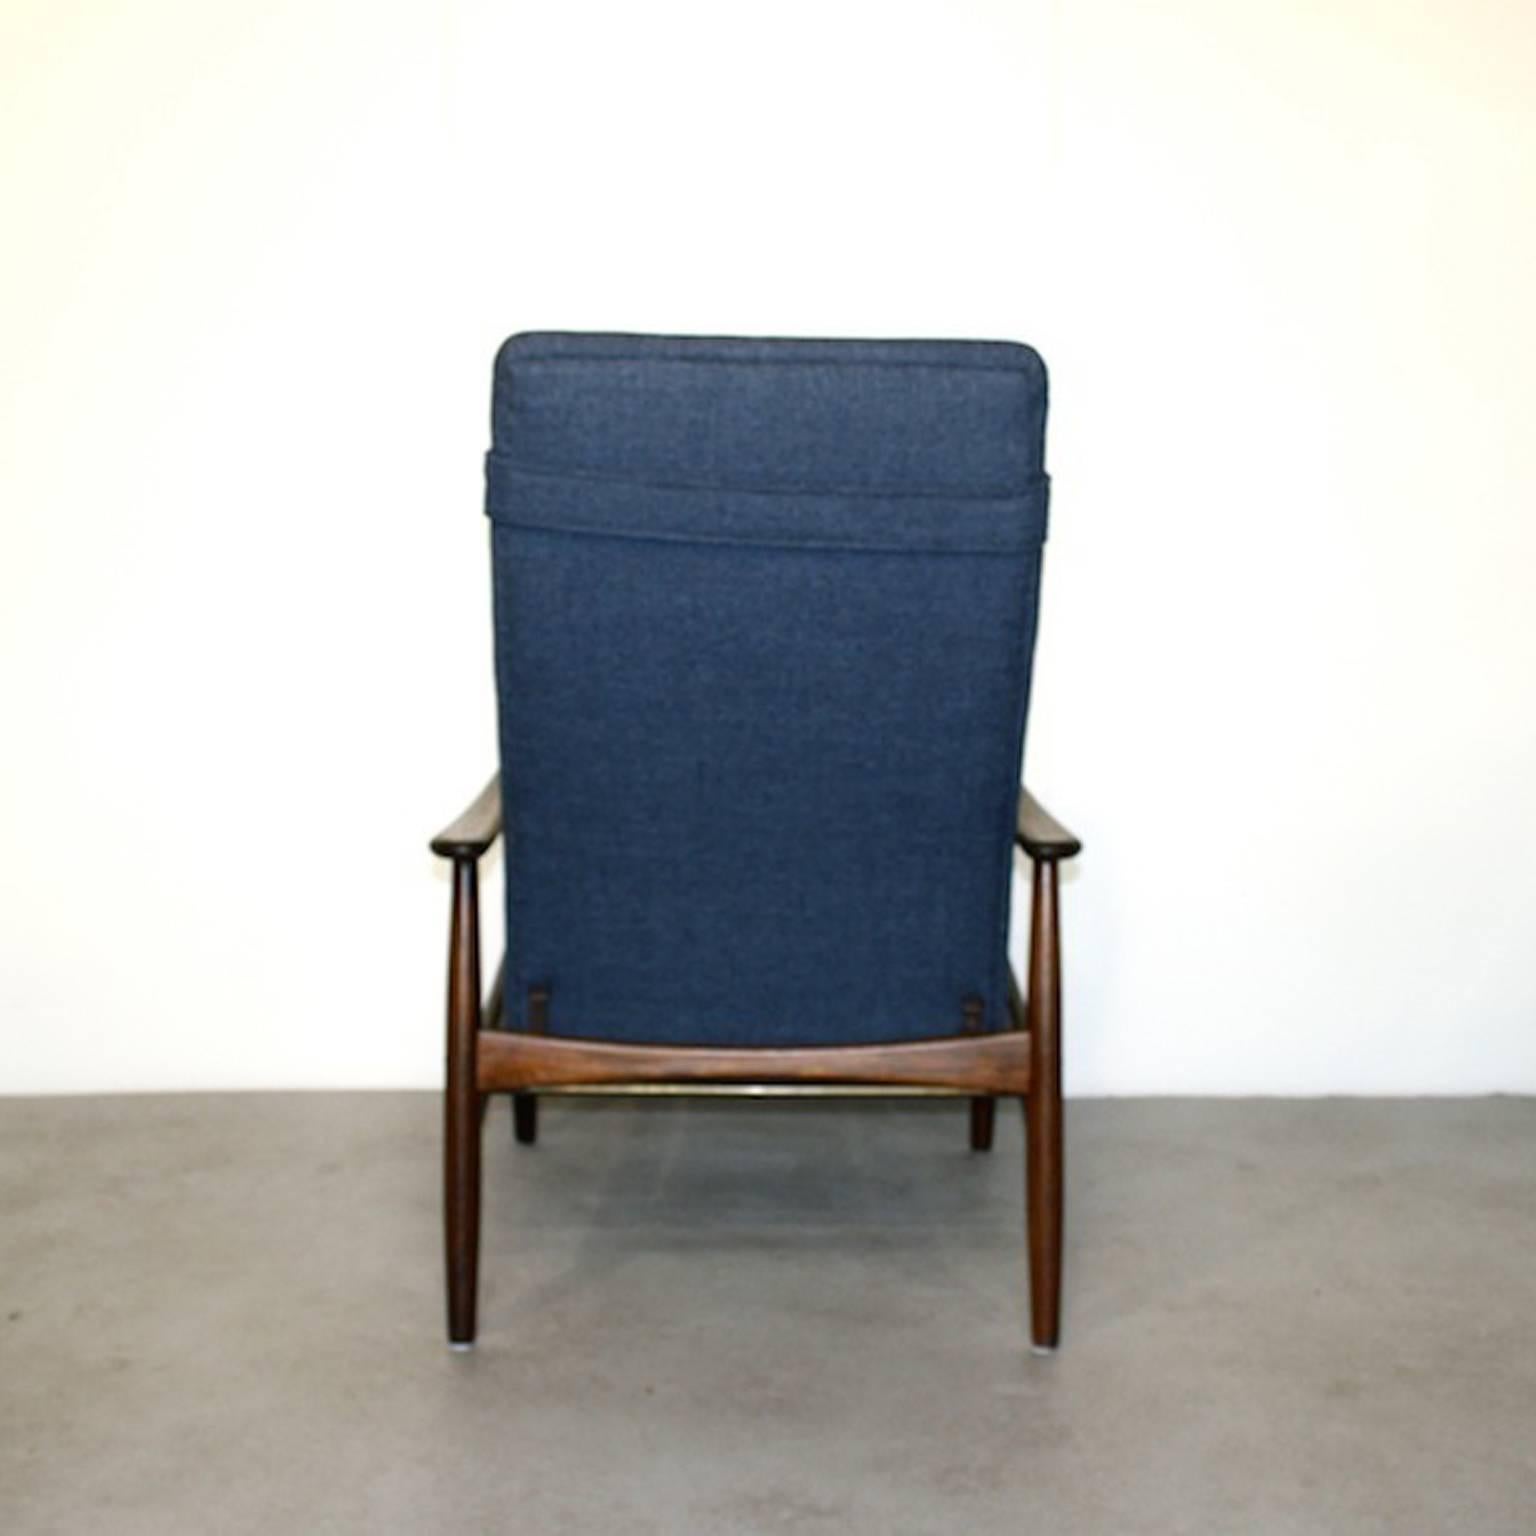 Scandinavian Modern High Back Lounge Chair by Søren Ladefoged for SL Mobler, Danish Design, 1950s